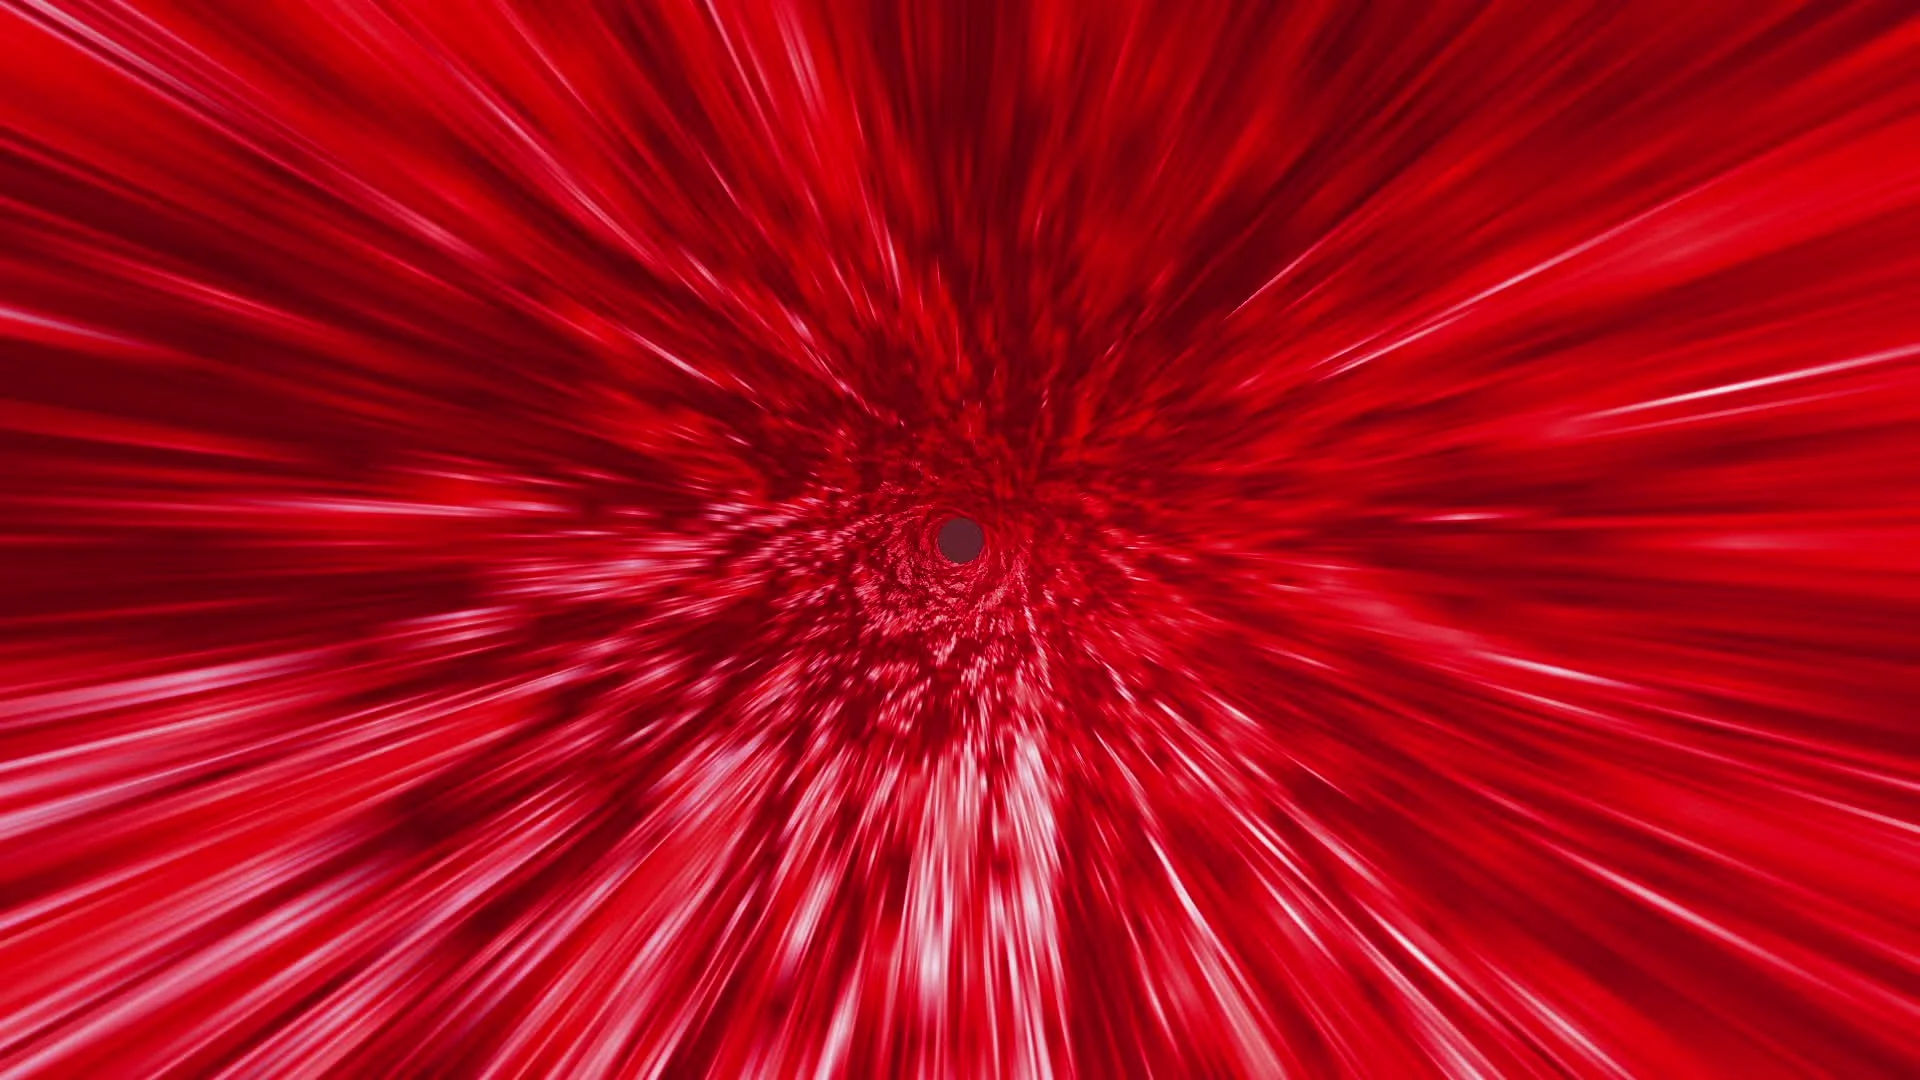 Infinite Answers [Damian] Star-burst-rays-tunnel-vortex-footage-025191417_prevstill